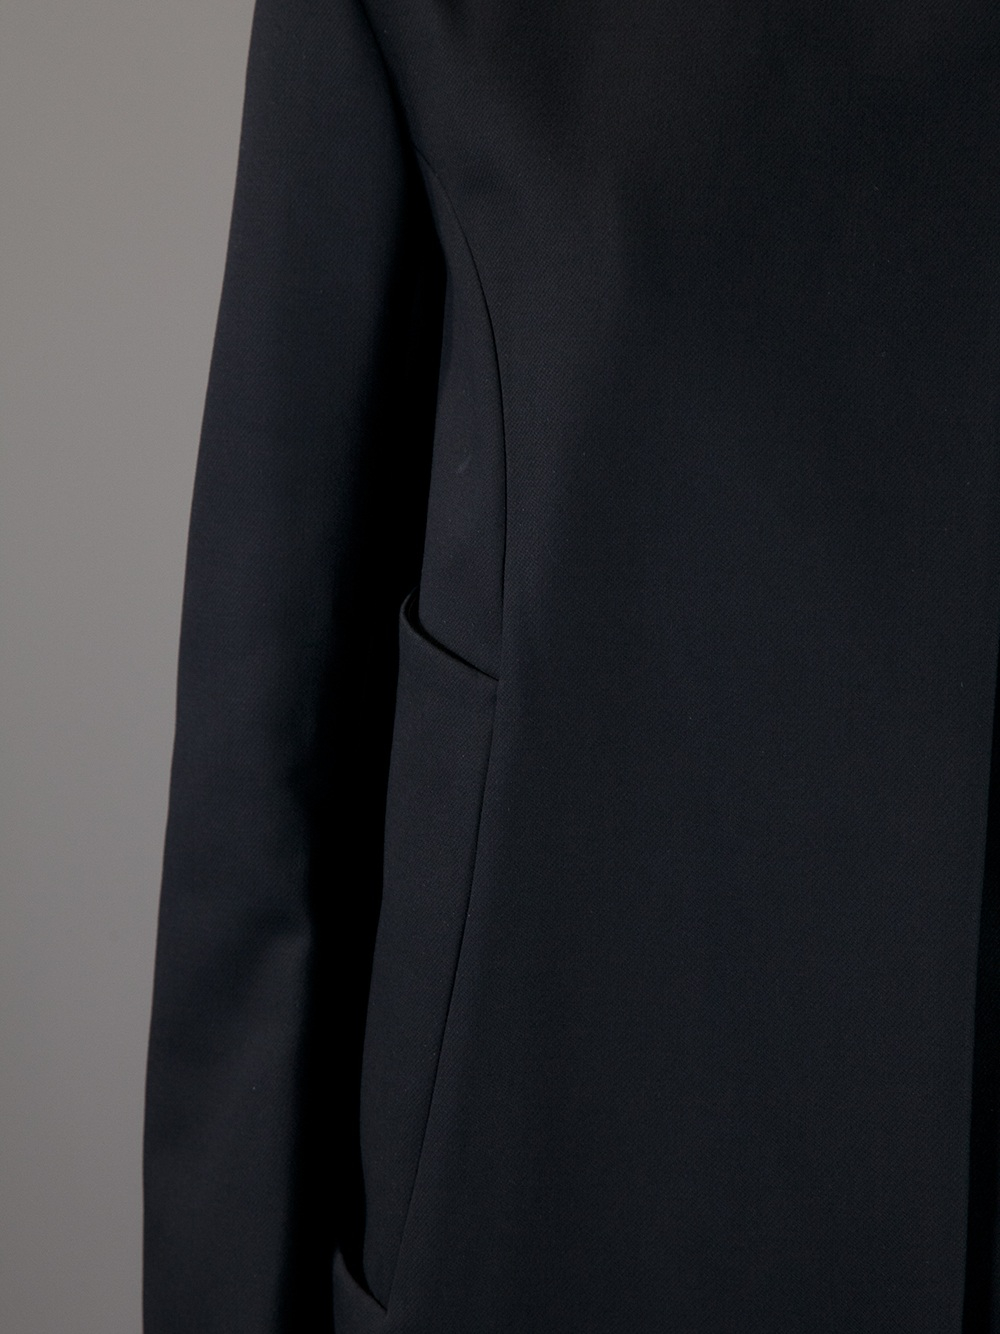 Lyst - Jil Sander Collarless Coat in Black